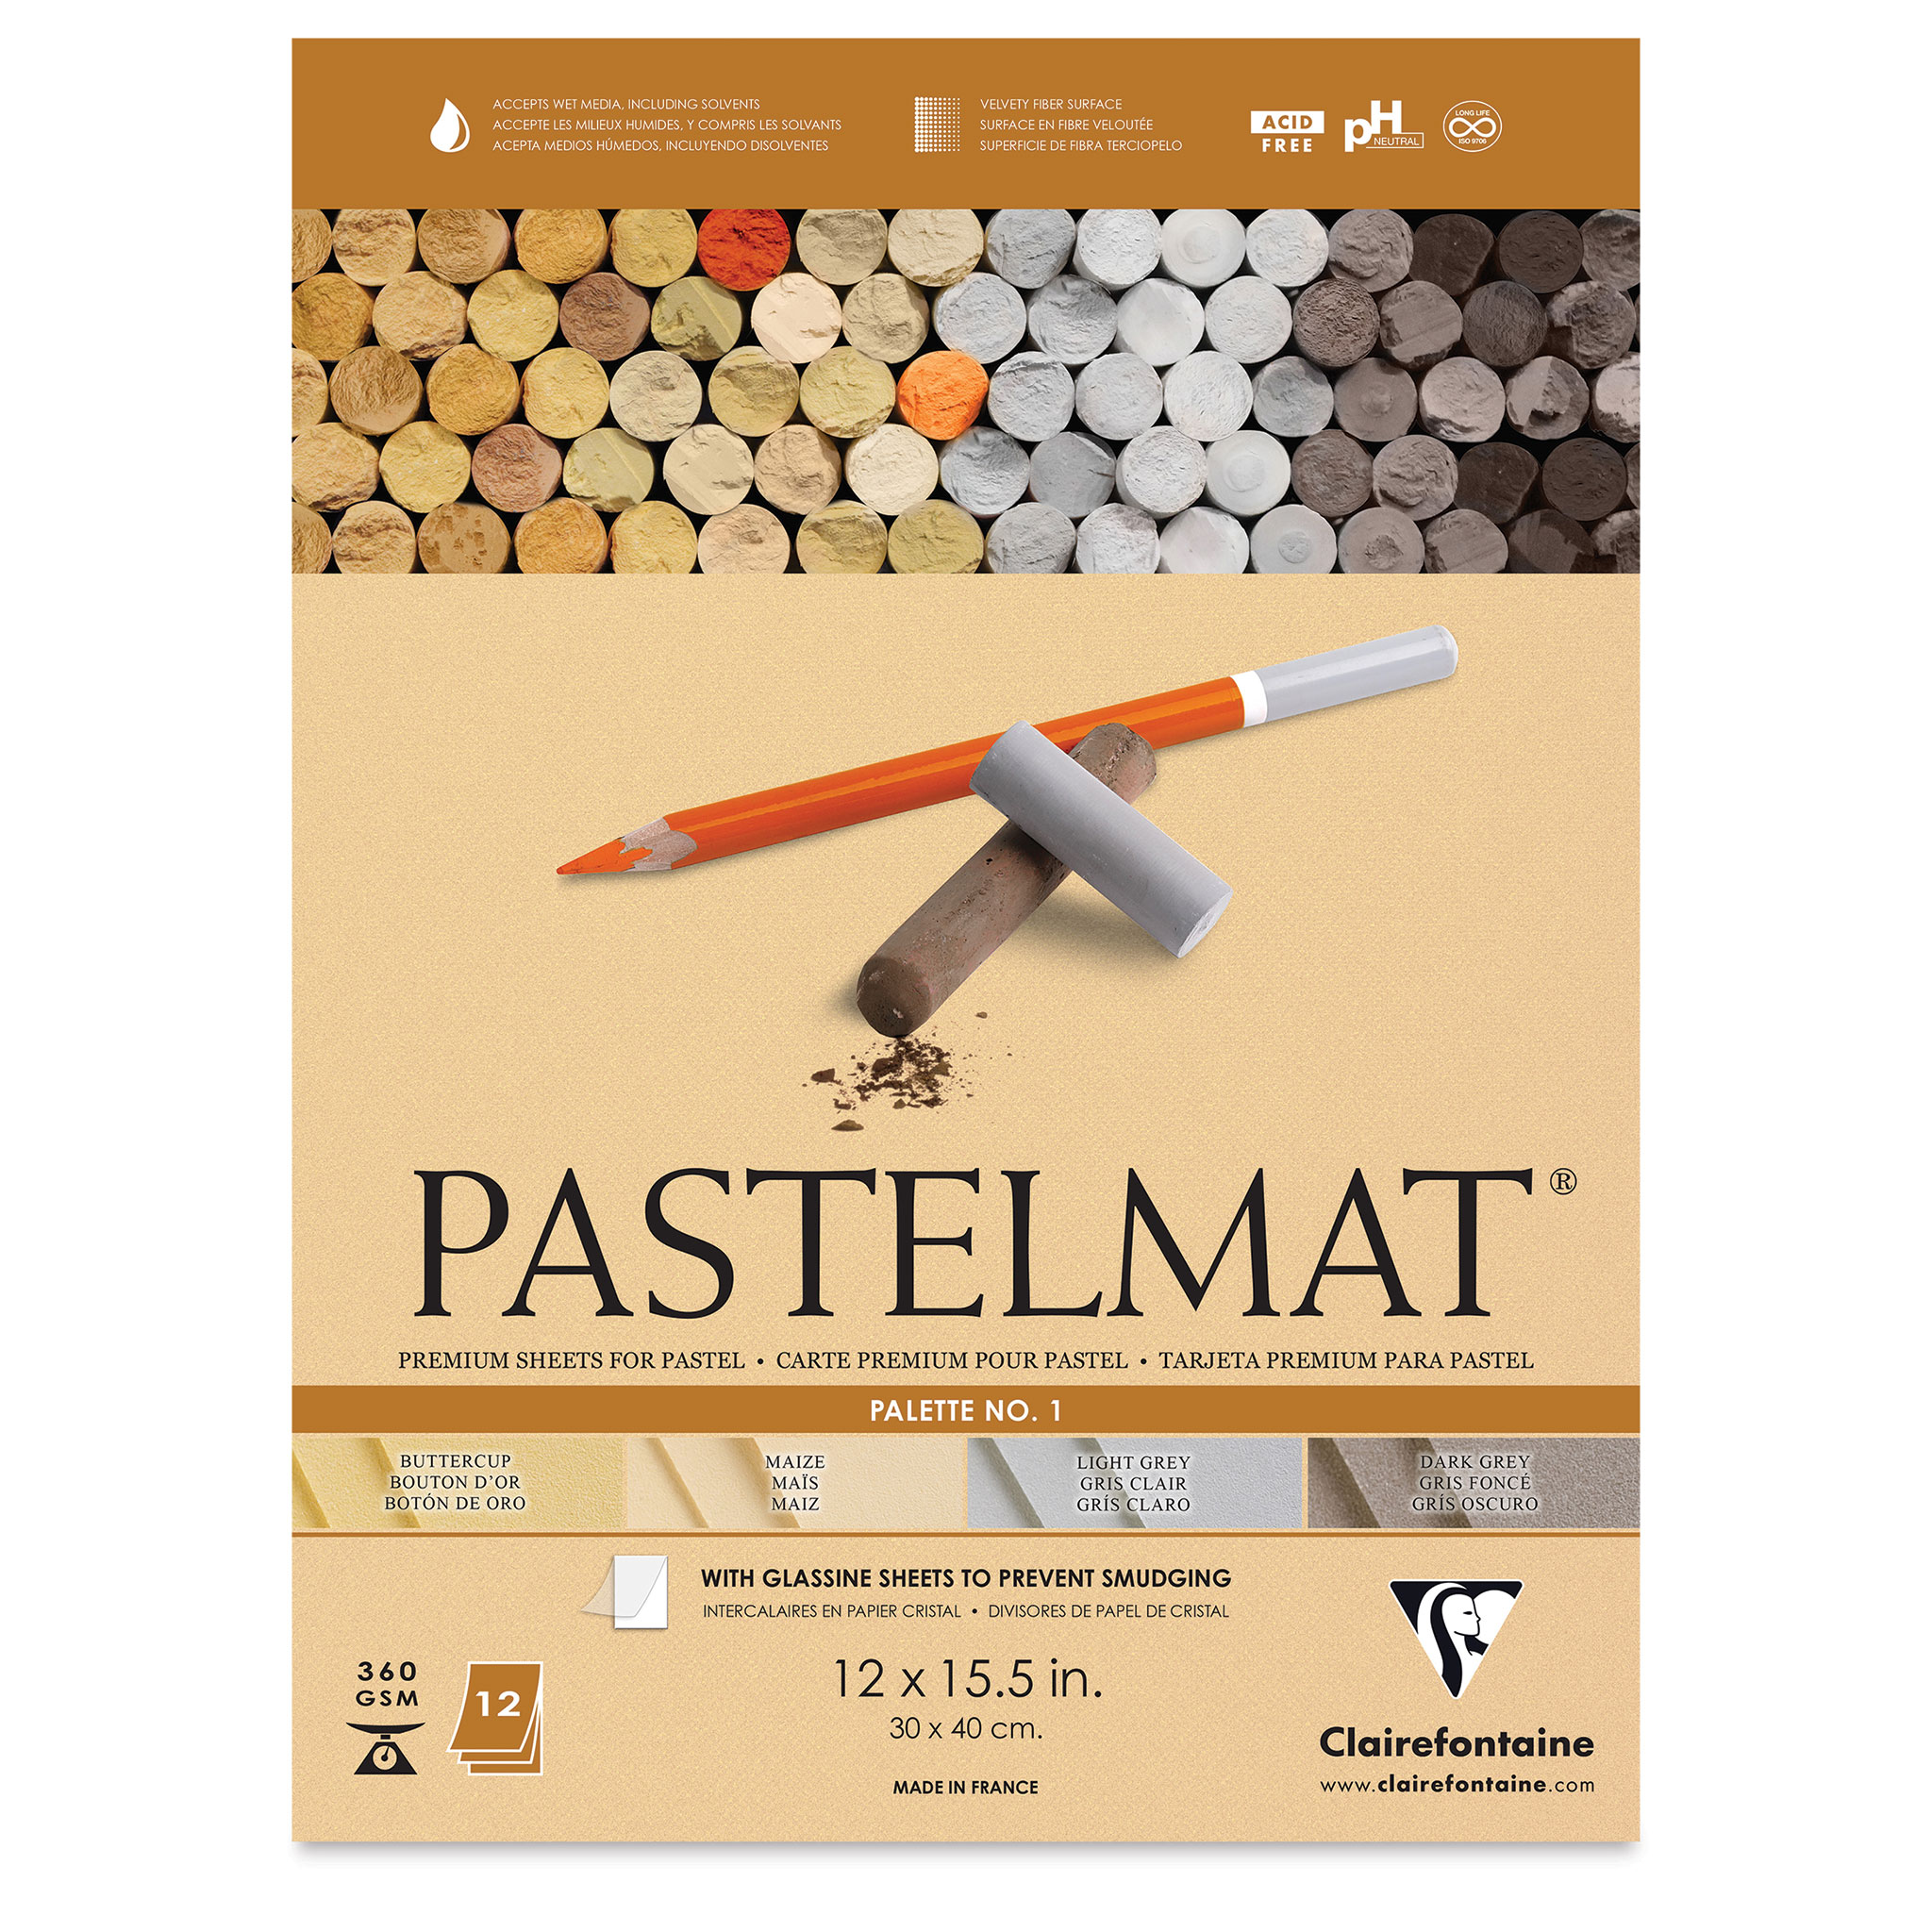 Clairefontaine Pastelmat Pad - 12 x 15-1/2, Palette No. 7, 12 Sheets, BLICK Art Materials